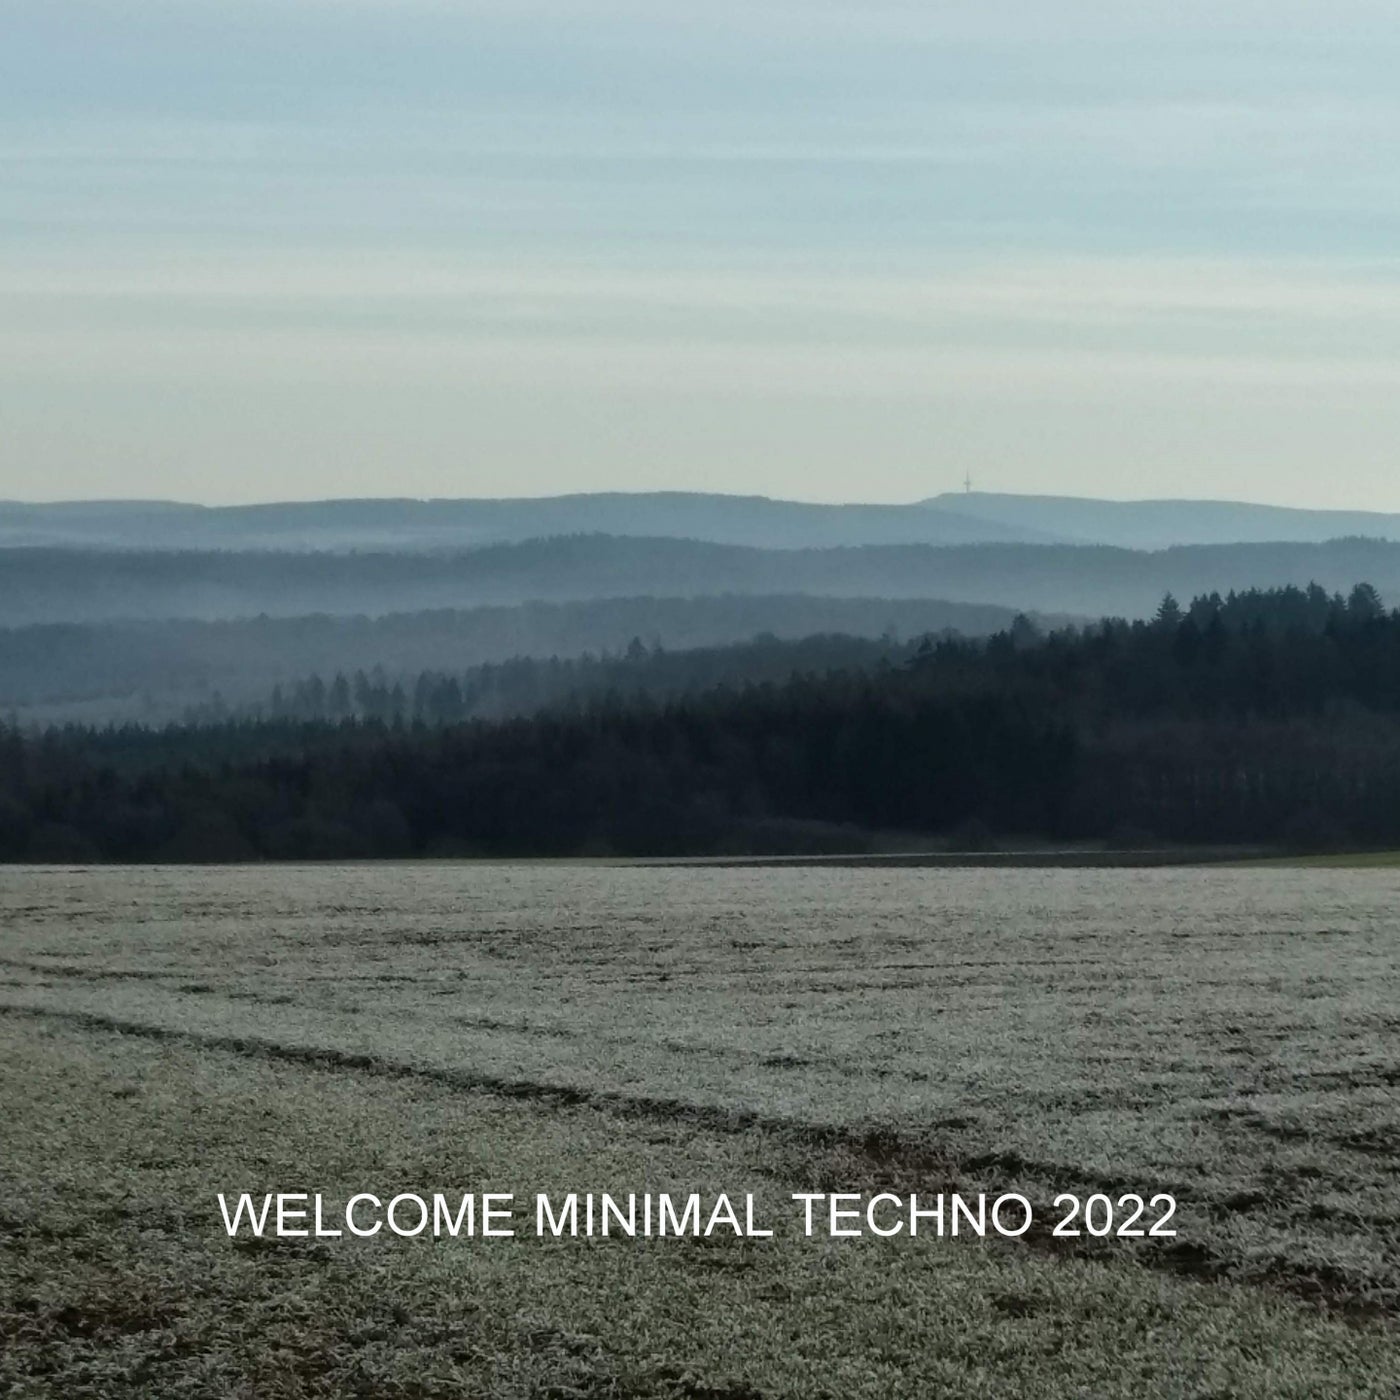 WELCOME MINIMAL TECHNO 2022